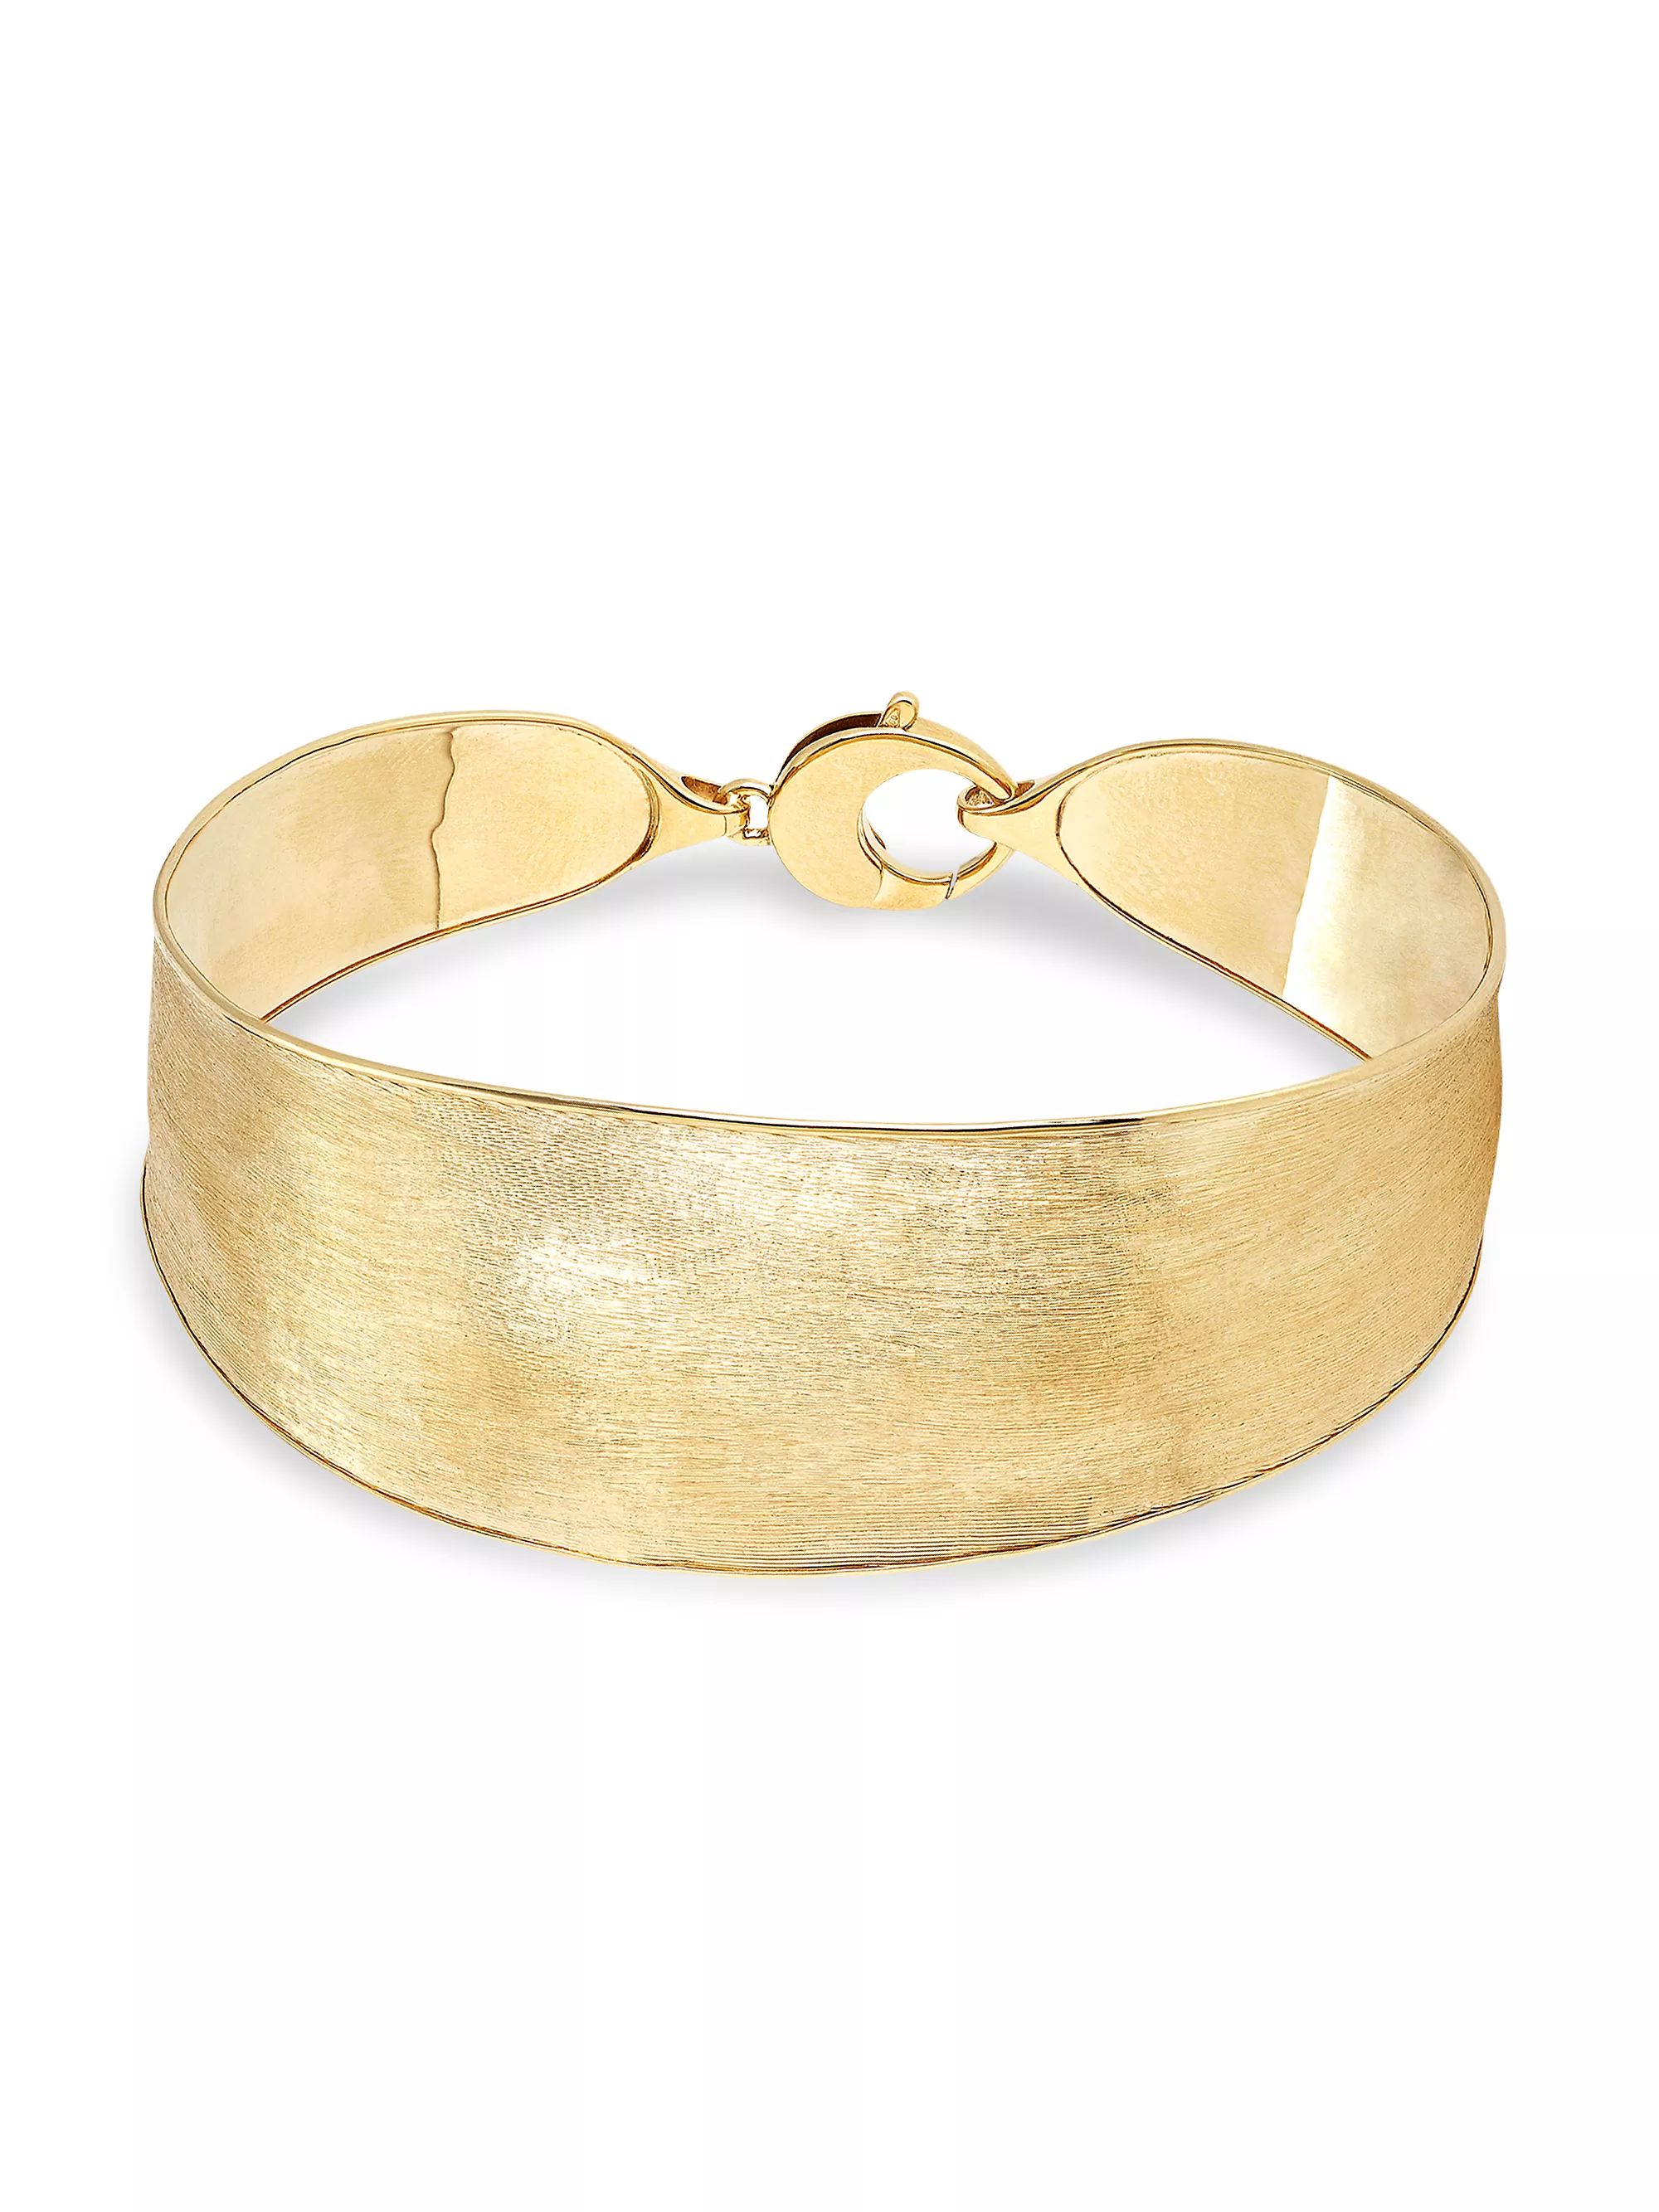 Fine JewelryBraceletsMarco BicegoLunaria 18K Yellow Gold Bangle$3,750 | Saks Fifth Avenue